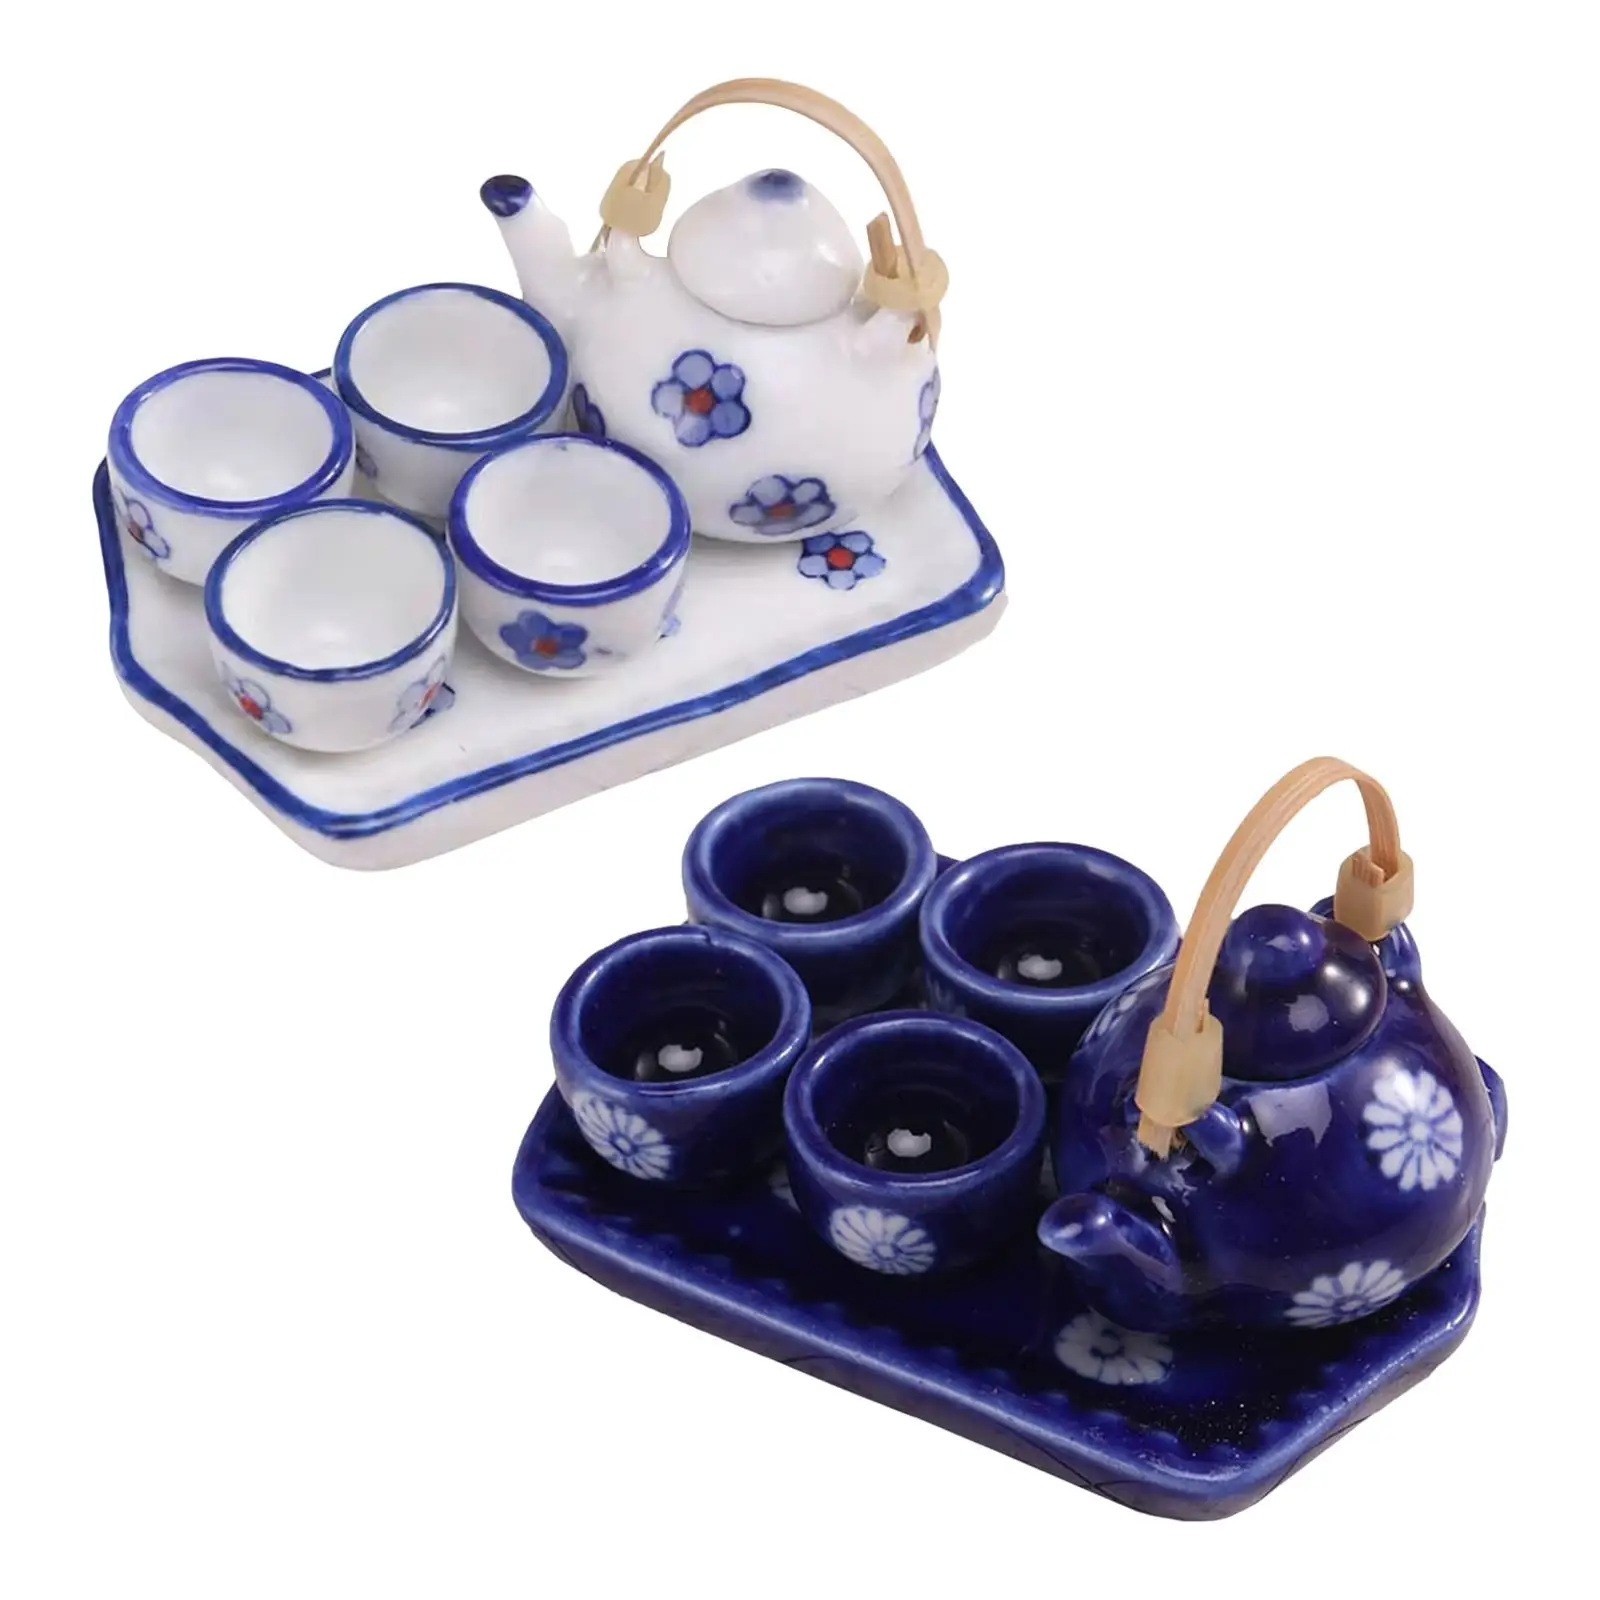 1:12 Dollhouse Miniature Tea Set Ceramic Teapot Model for Desktop Dining Table Room Decor